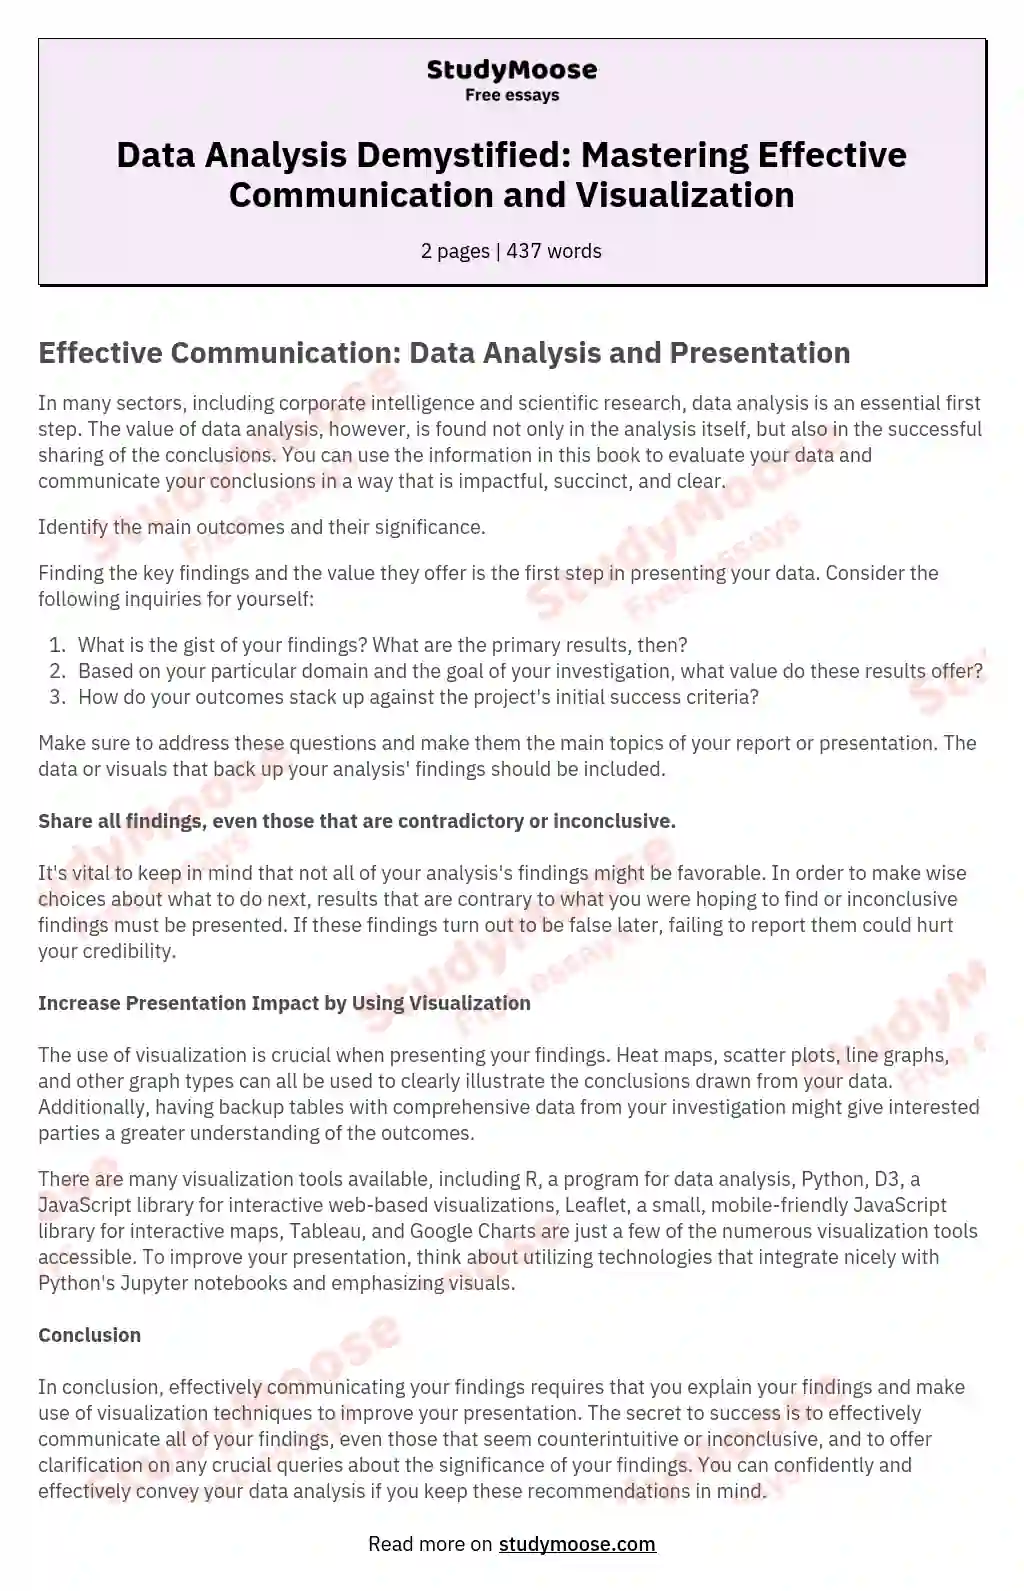 Data Analysis Demystified: Mastering Effective Communication and Visualization essay